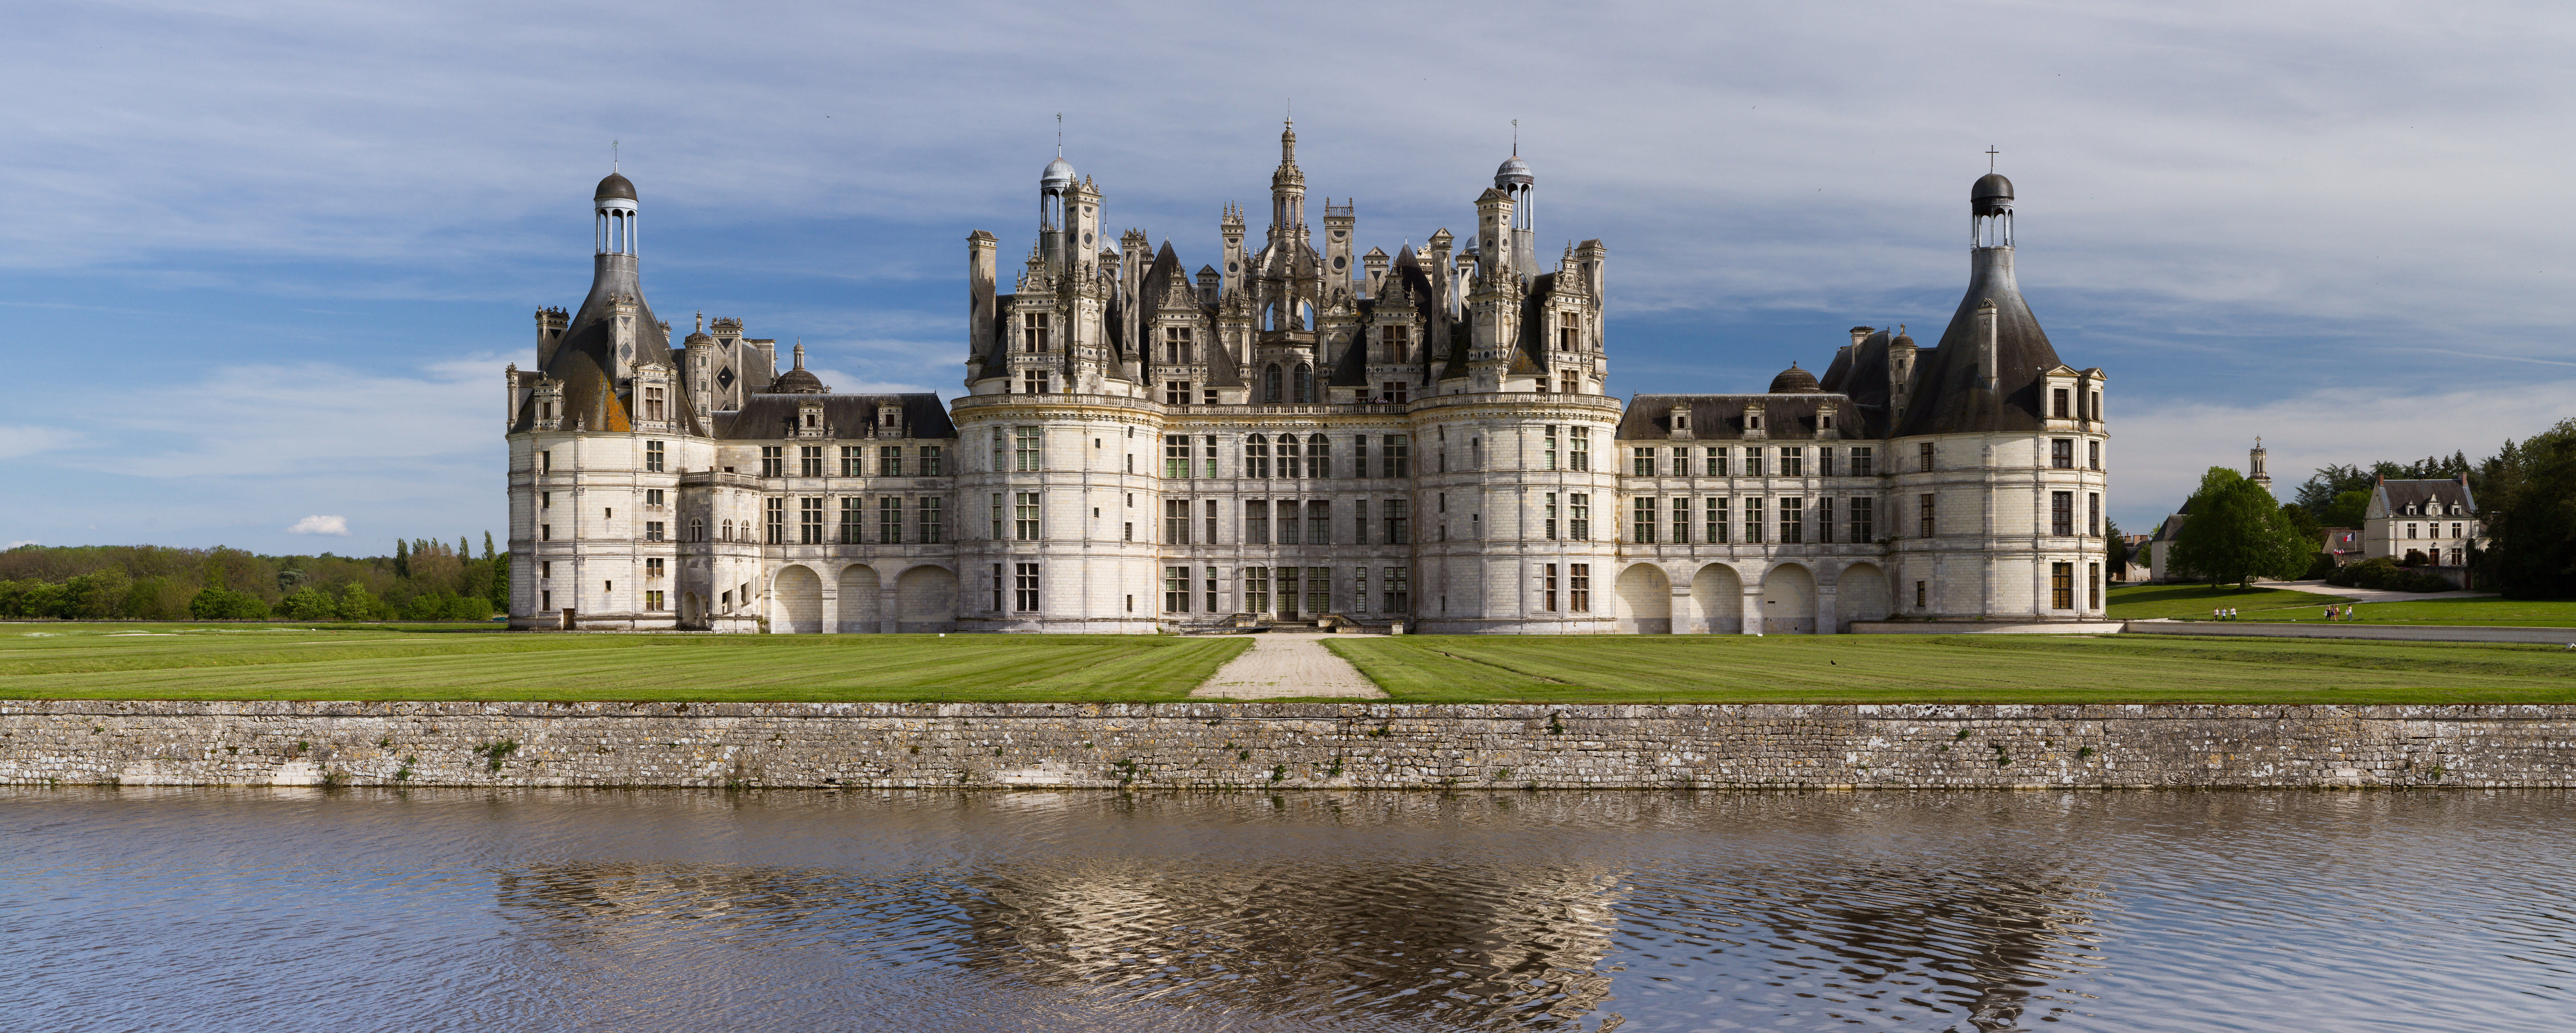 File:Chambord Castle Northwest facade small.jpg - Wikimedia Commons